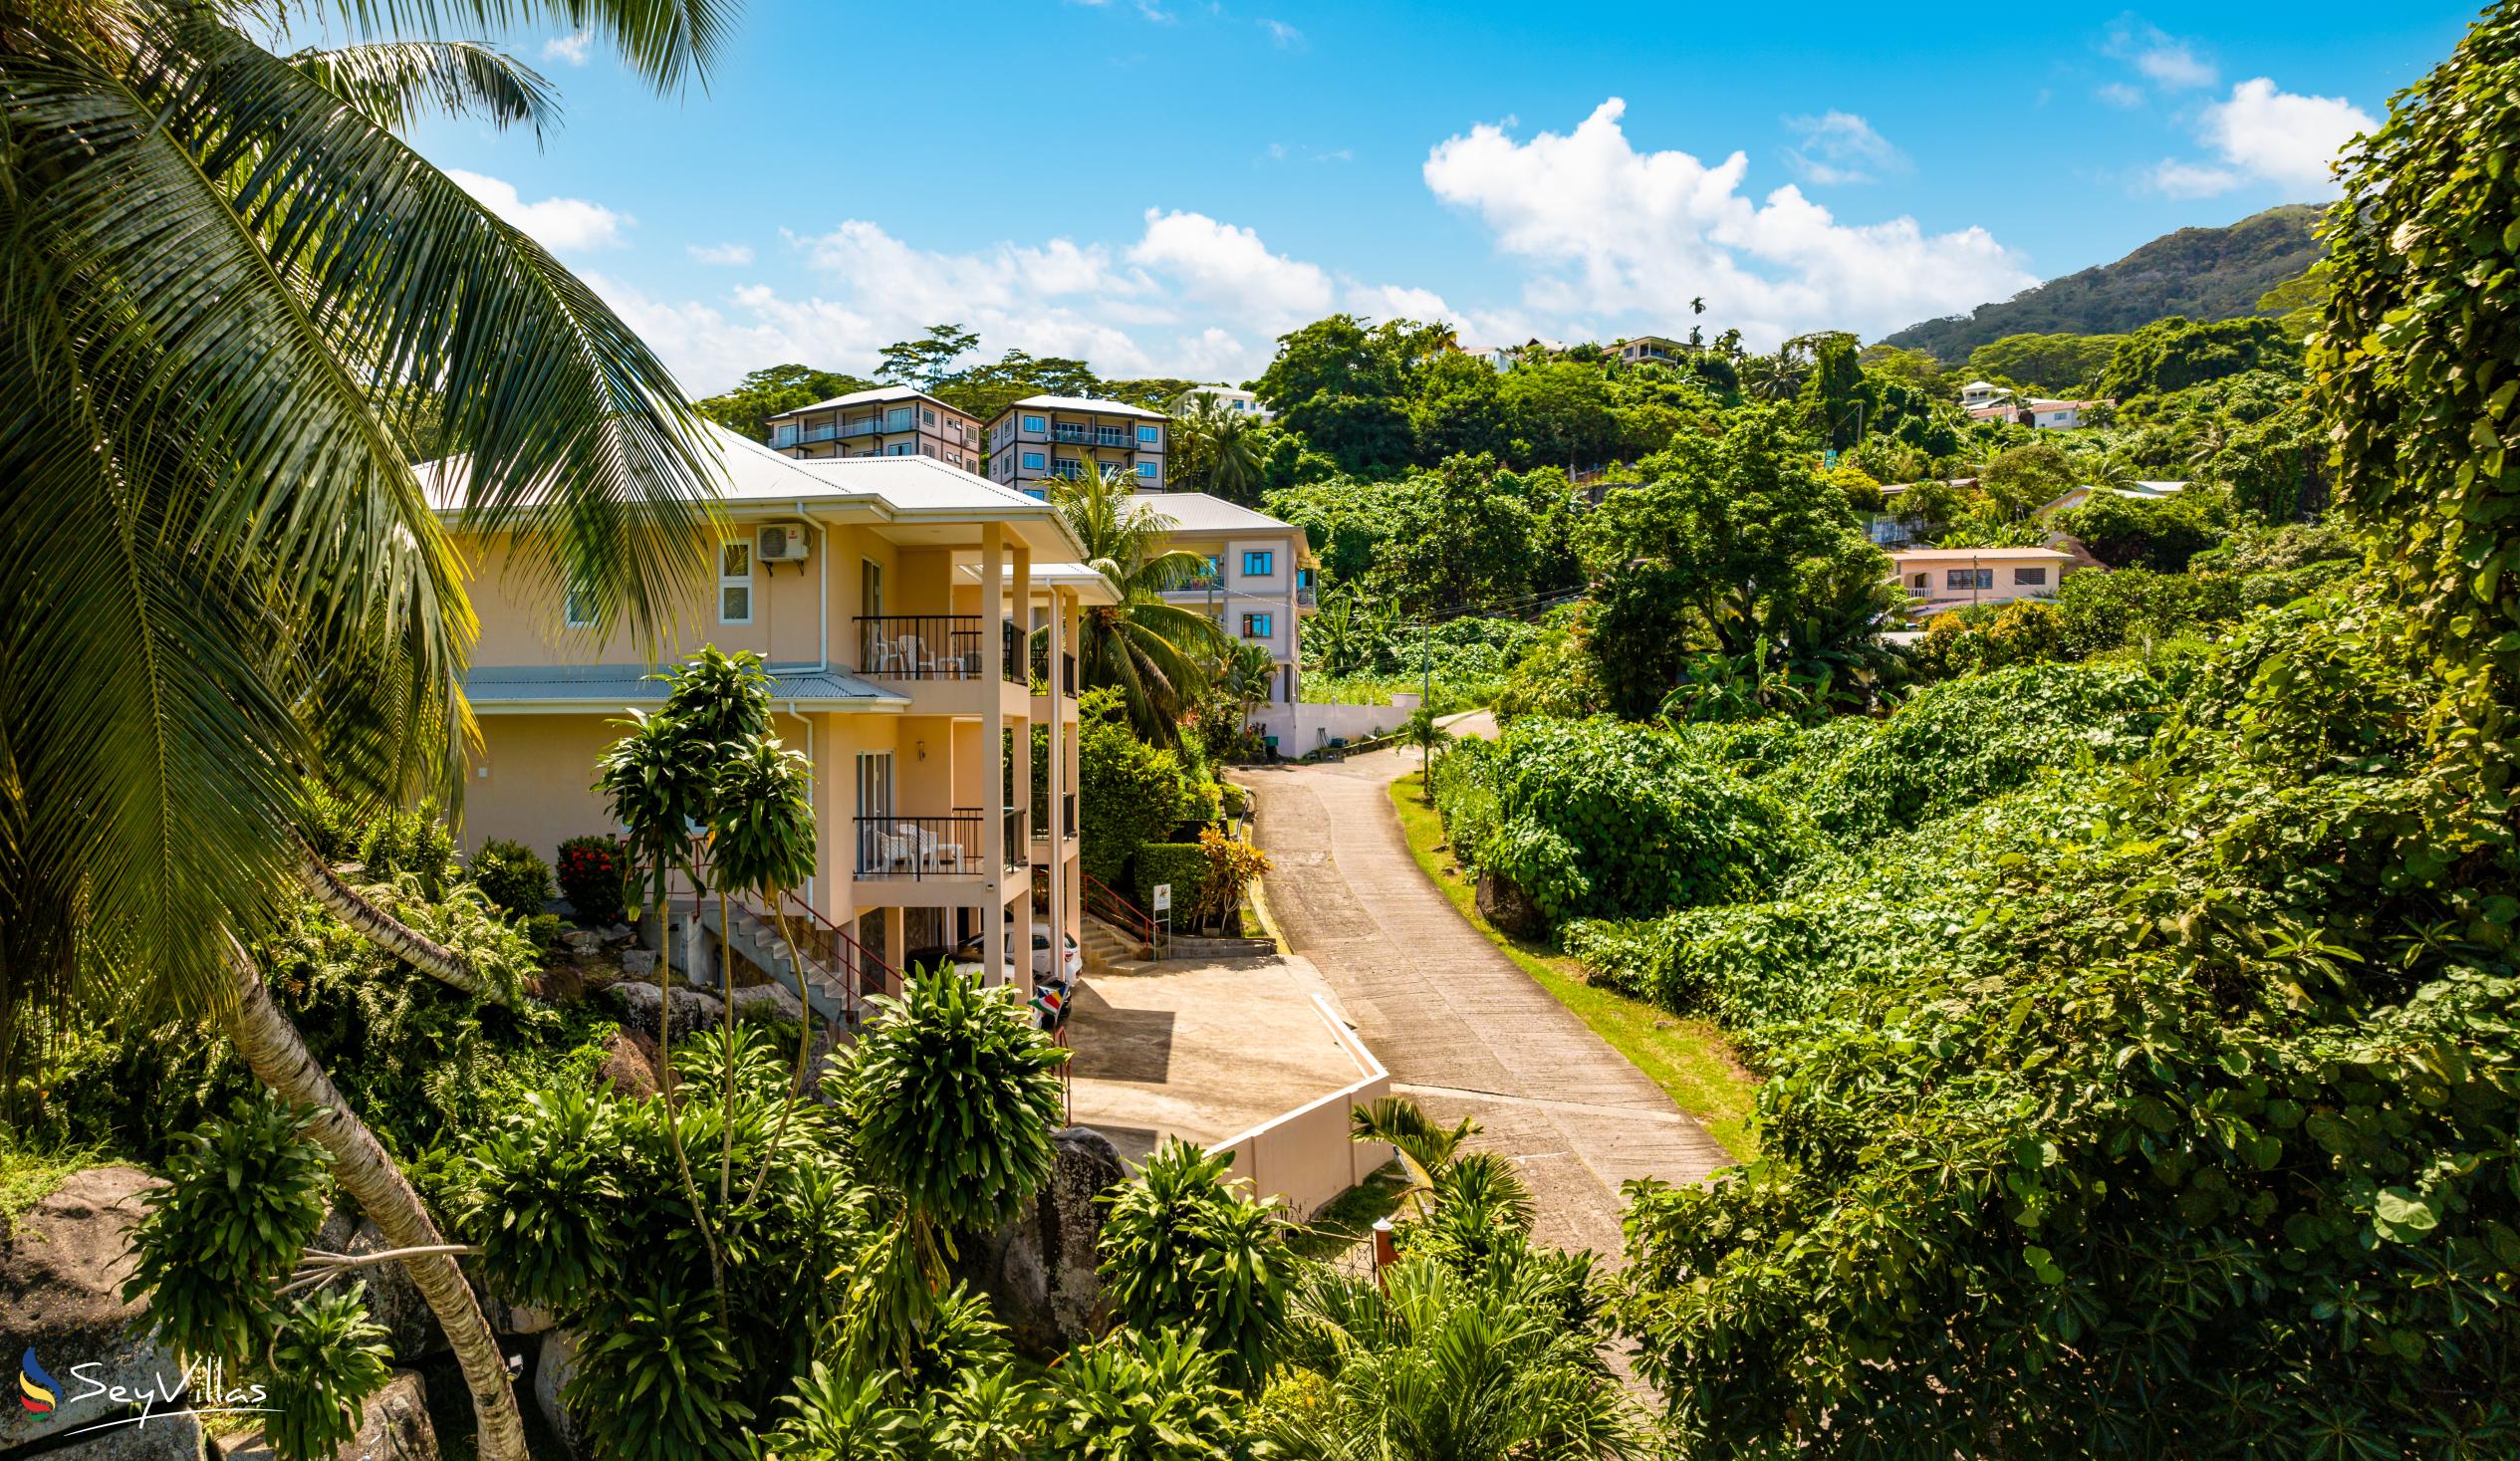 Photo 11: JAIDSS Holiday Apartments - Outdoor area - Mahé (Seychelles)